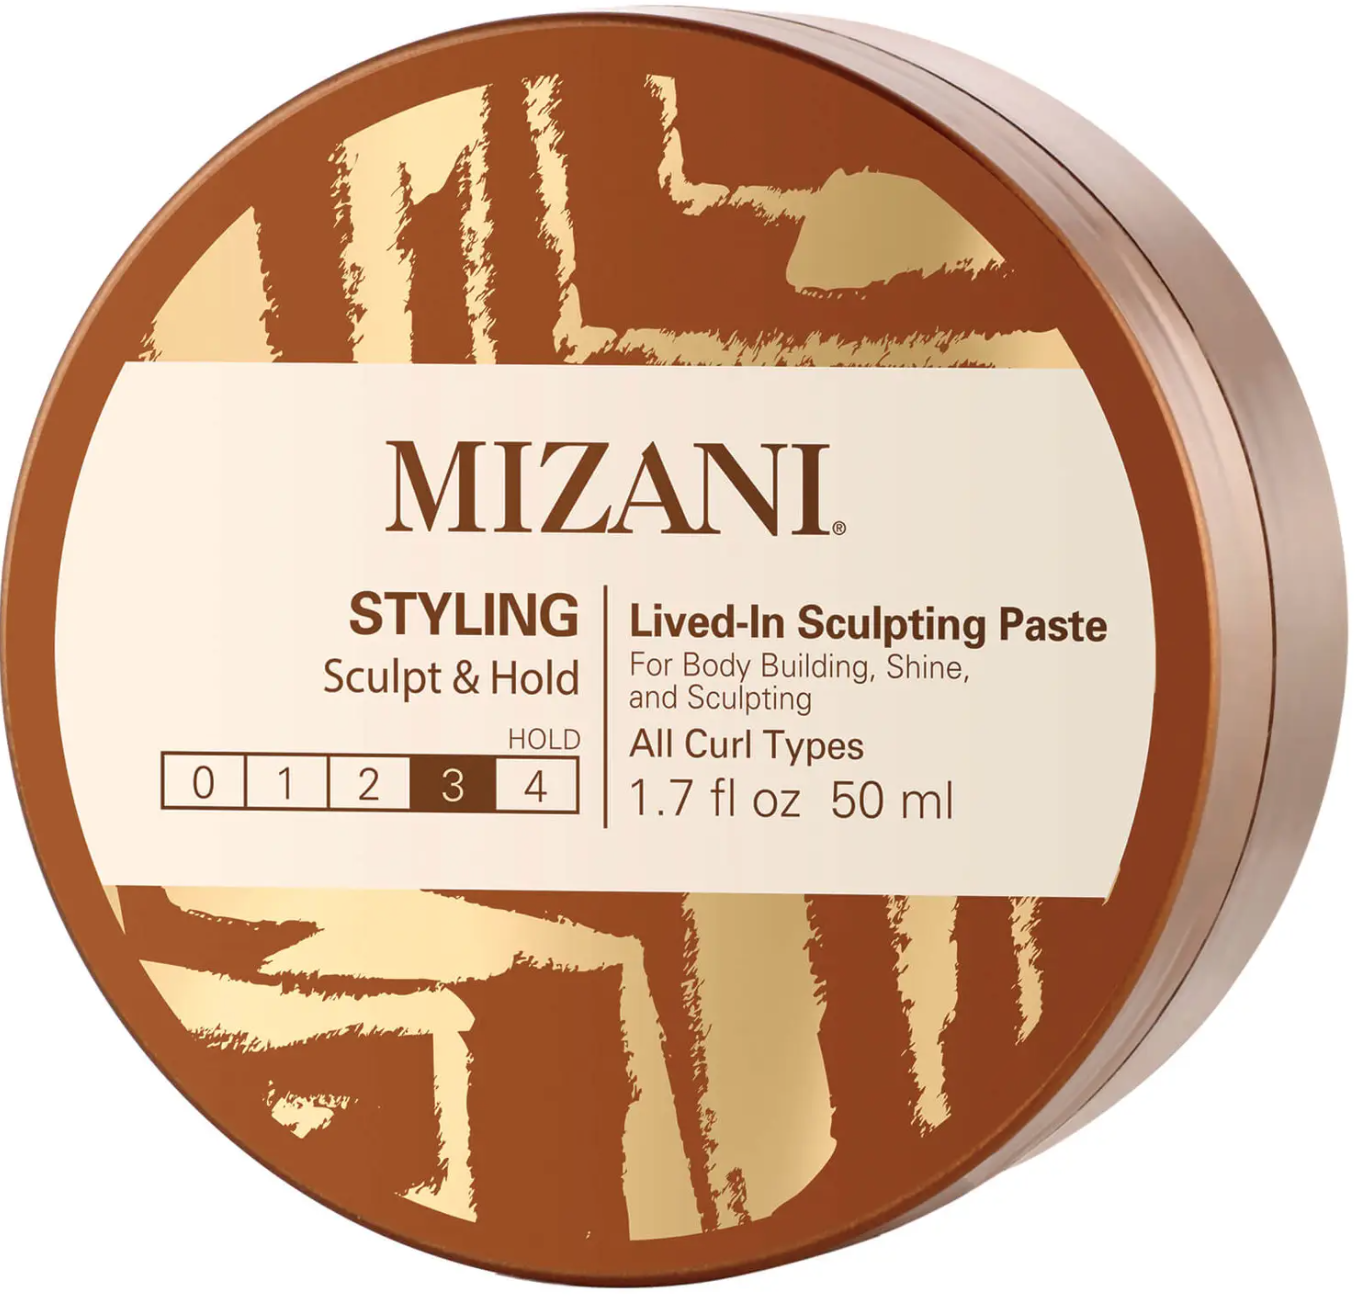 Mizani Lived-In Sculpting Paste, Great Spring Sale